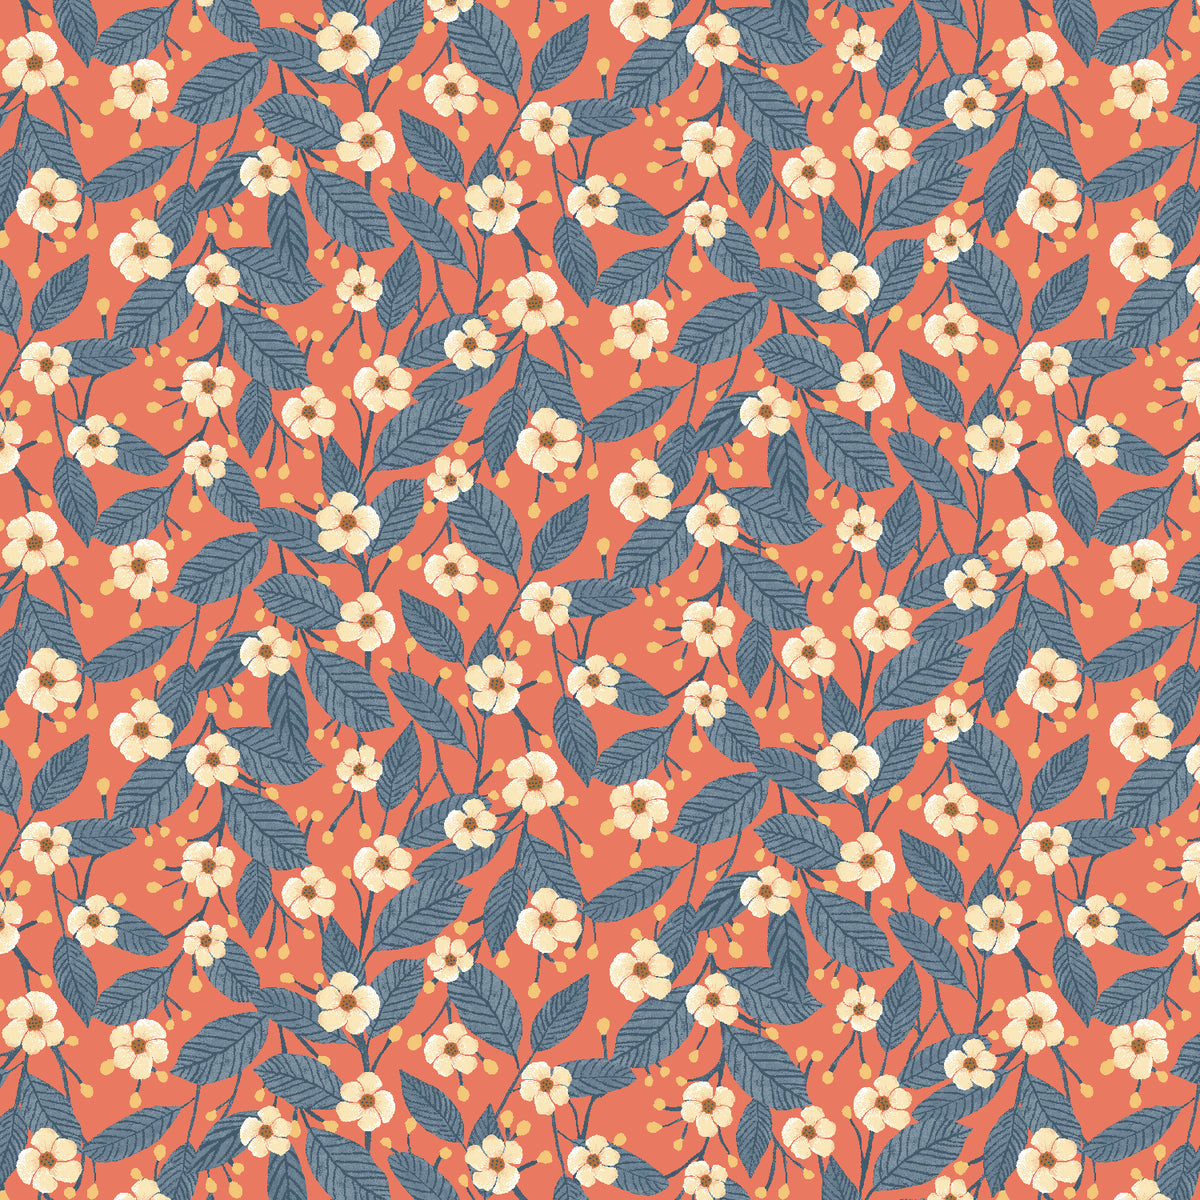 Moonlight Garden Quilt Fabric - Tea Bloom Small Floral in Persimmon Orange - RJ5502-PE2